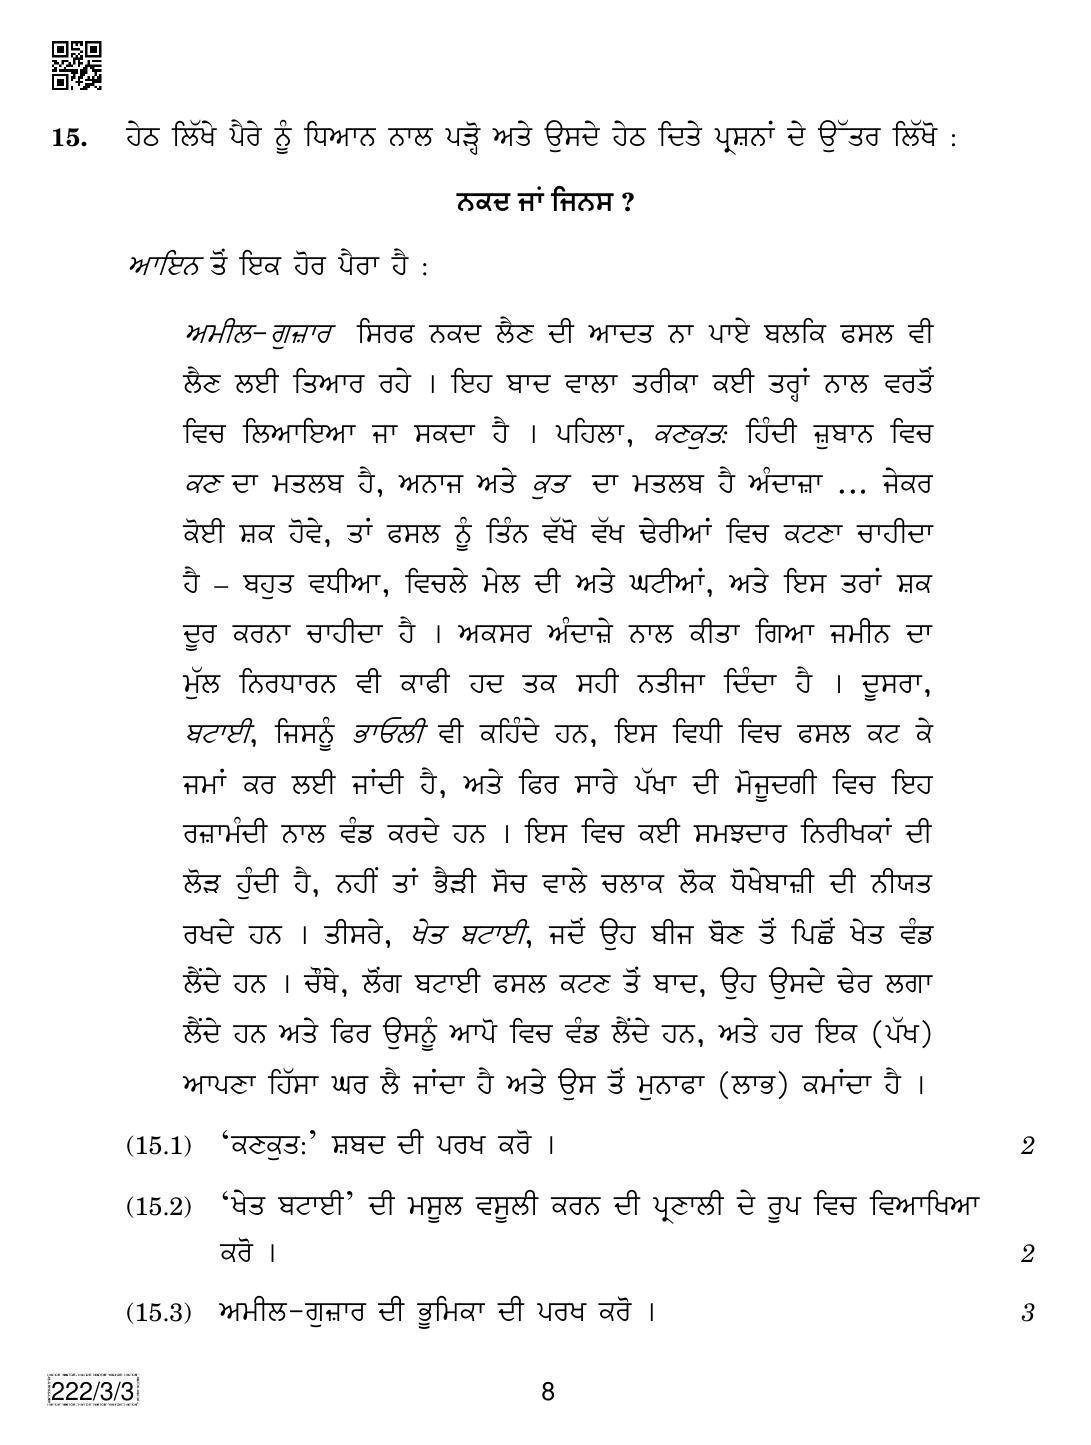 CBSE Class 12 222-3-3 Hiastory (Punjabi) 2019 Question Paper - Page 8